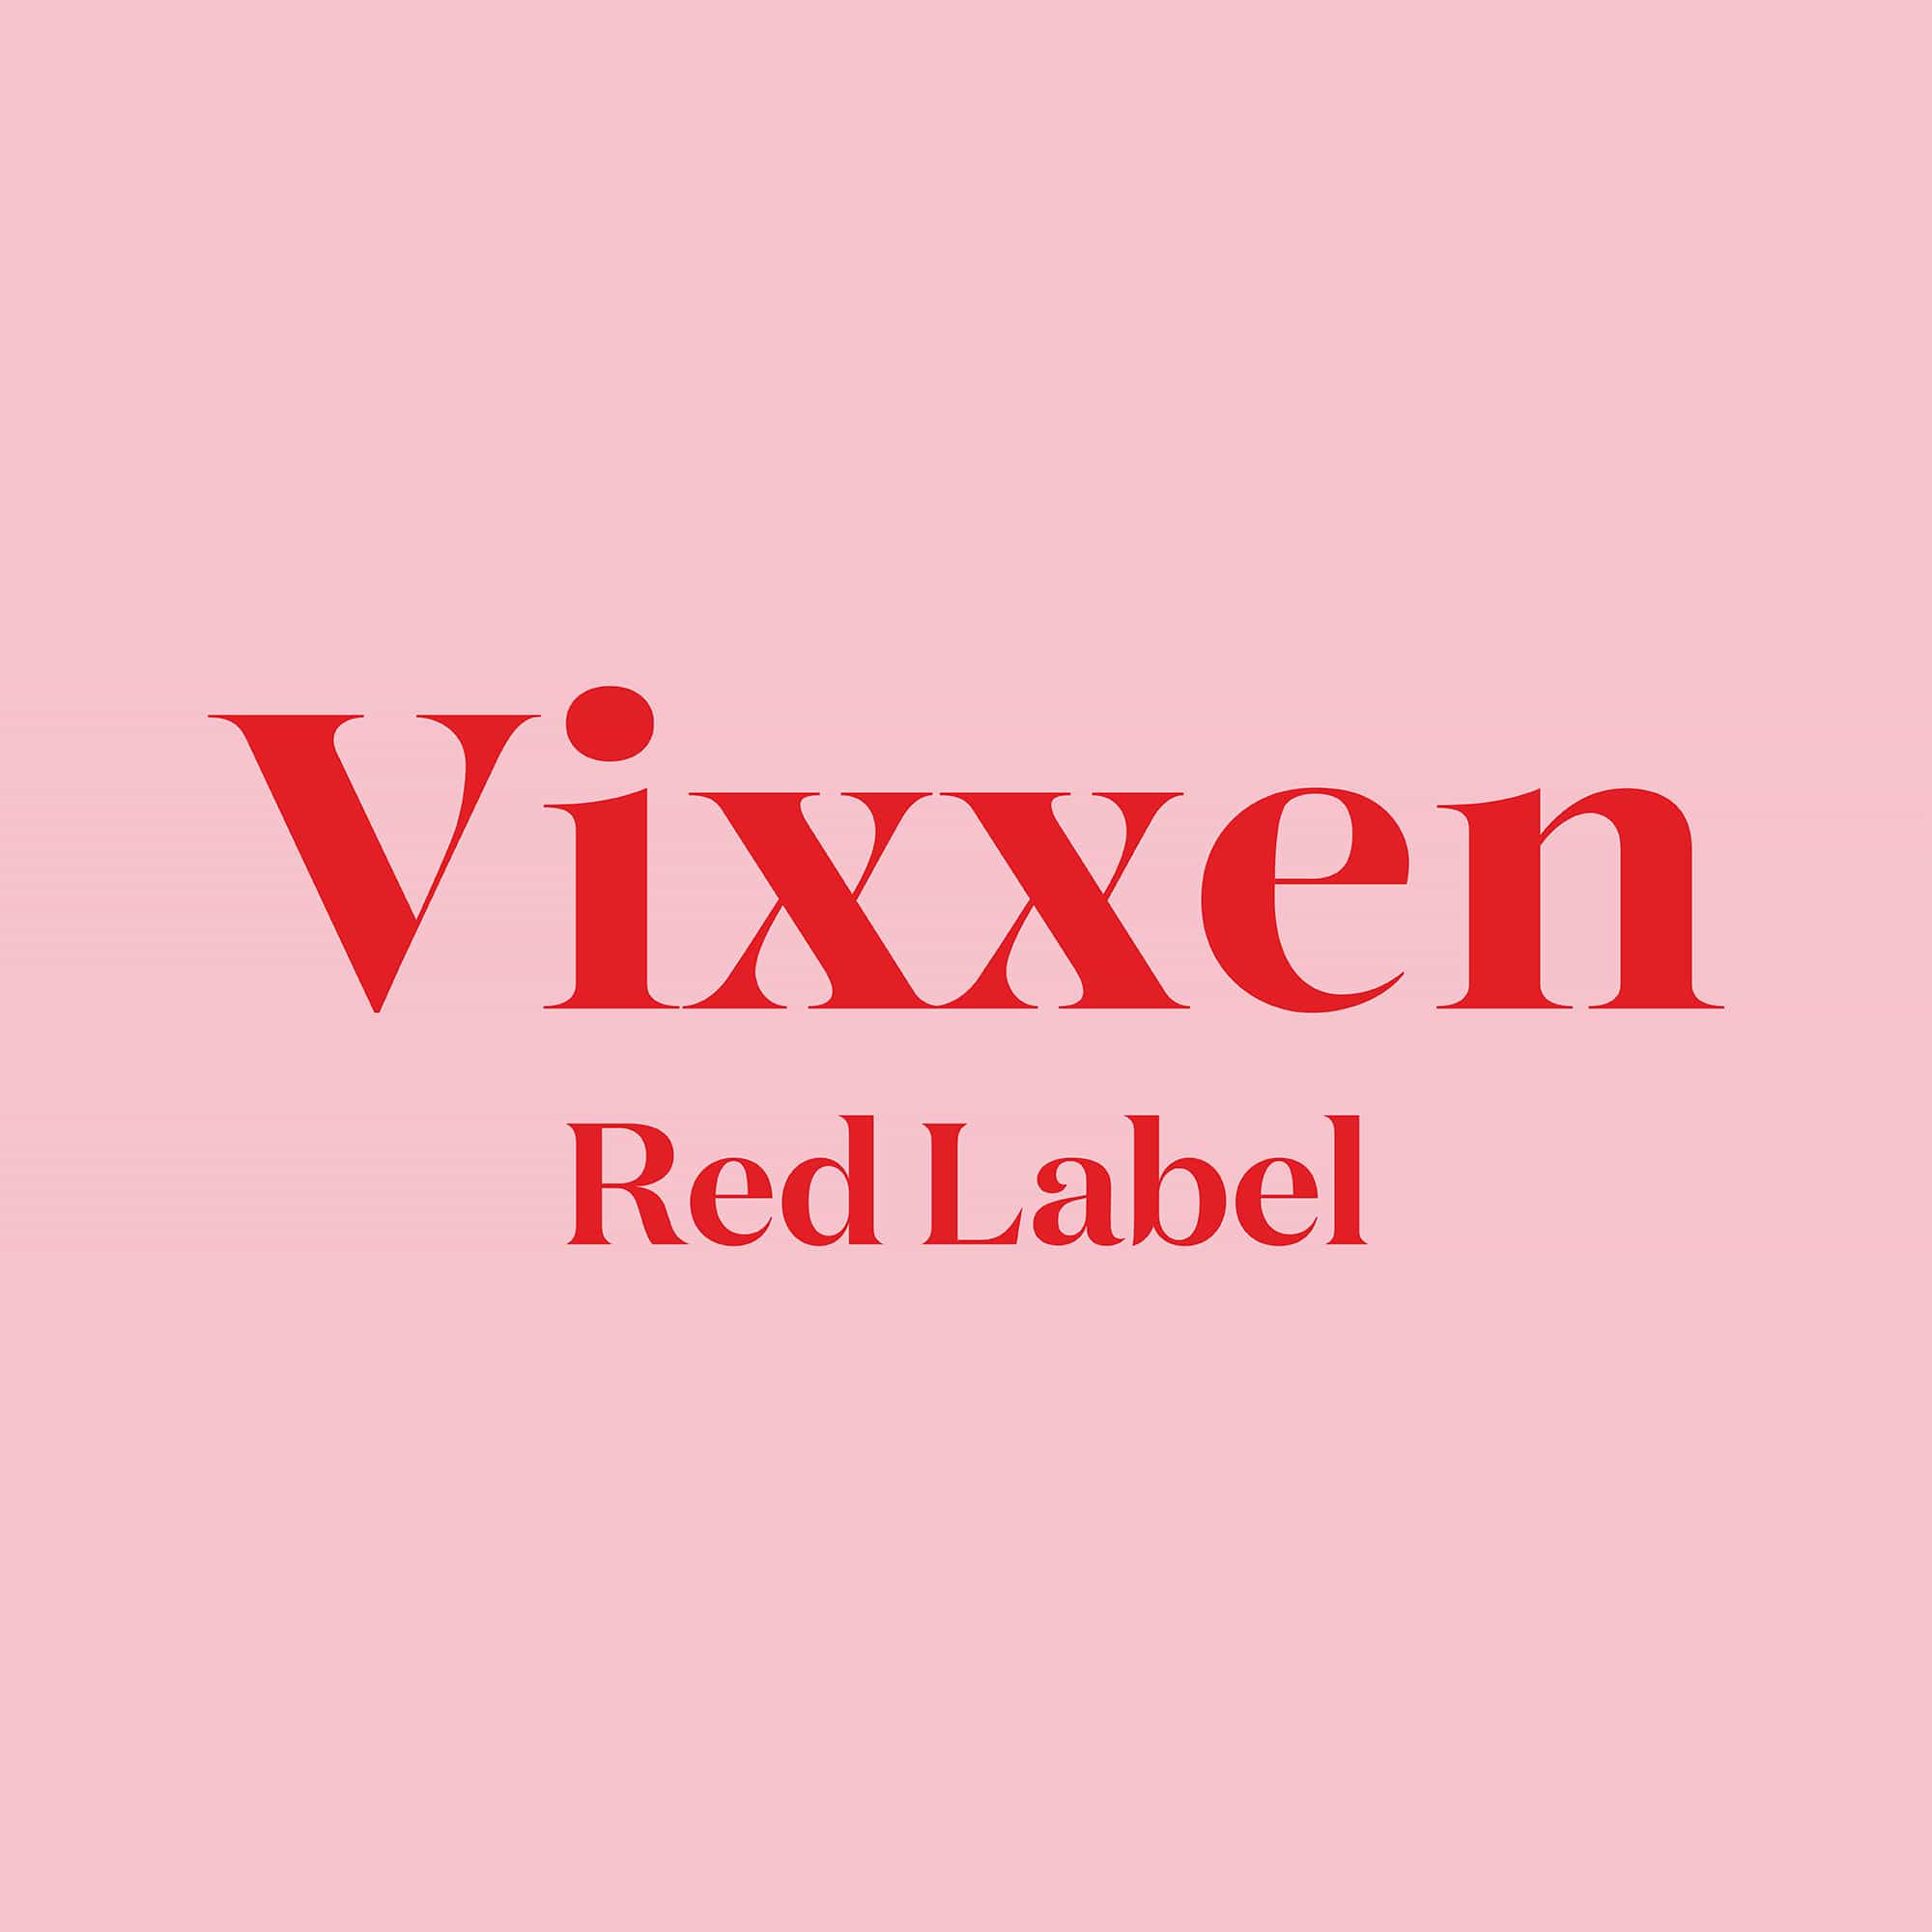 Vixxen Red Label logo PINK